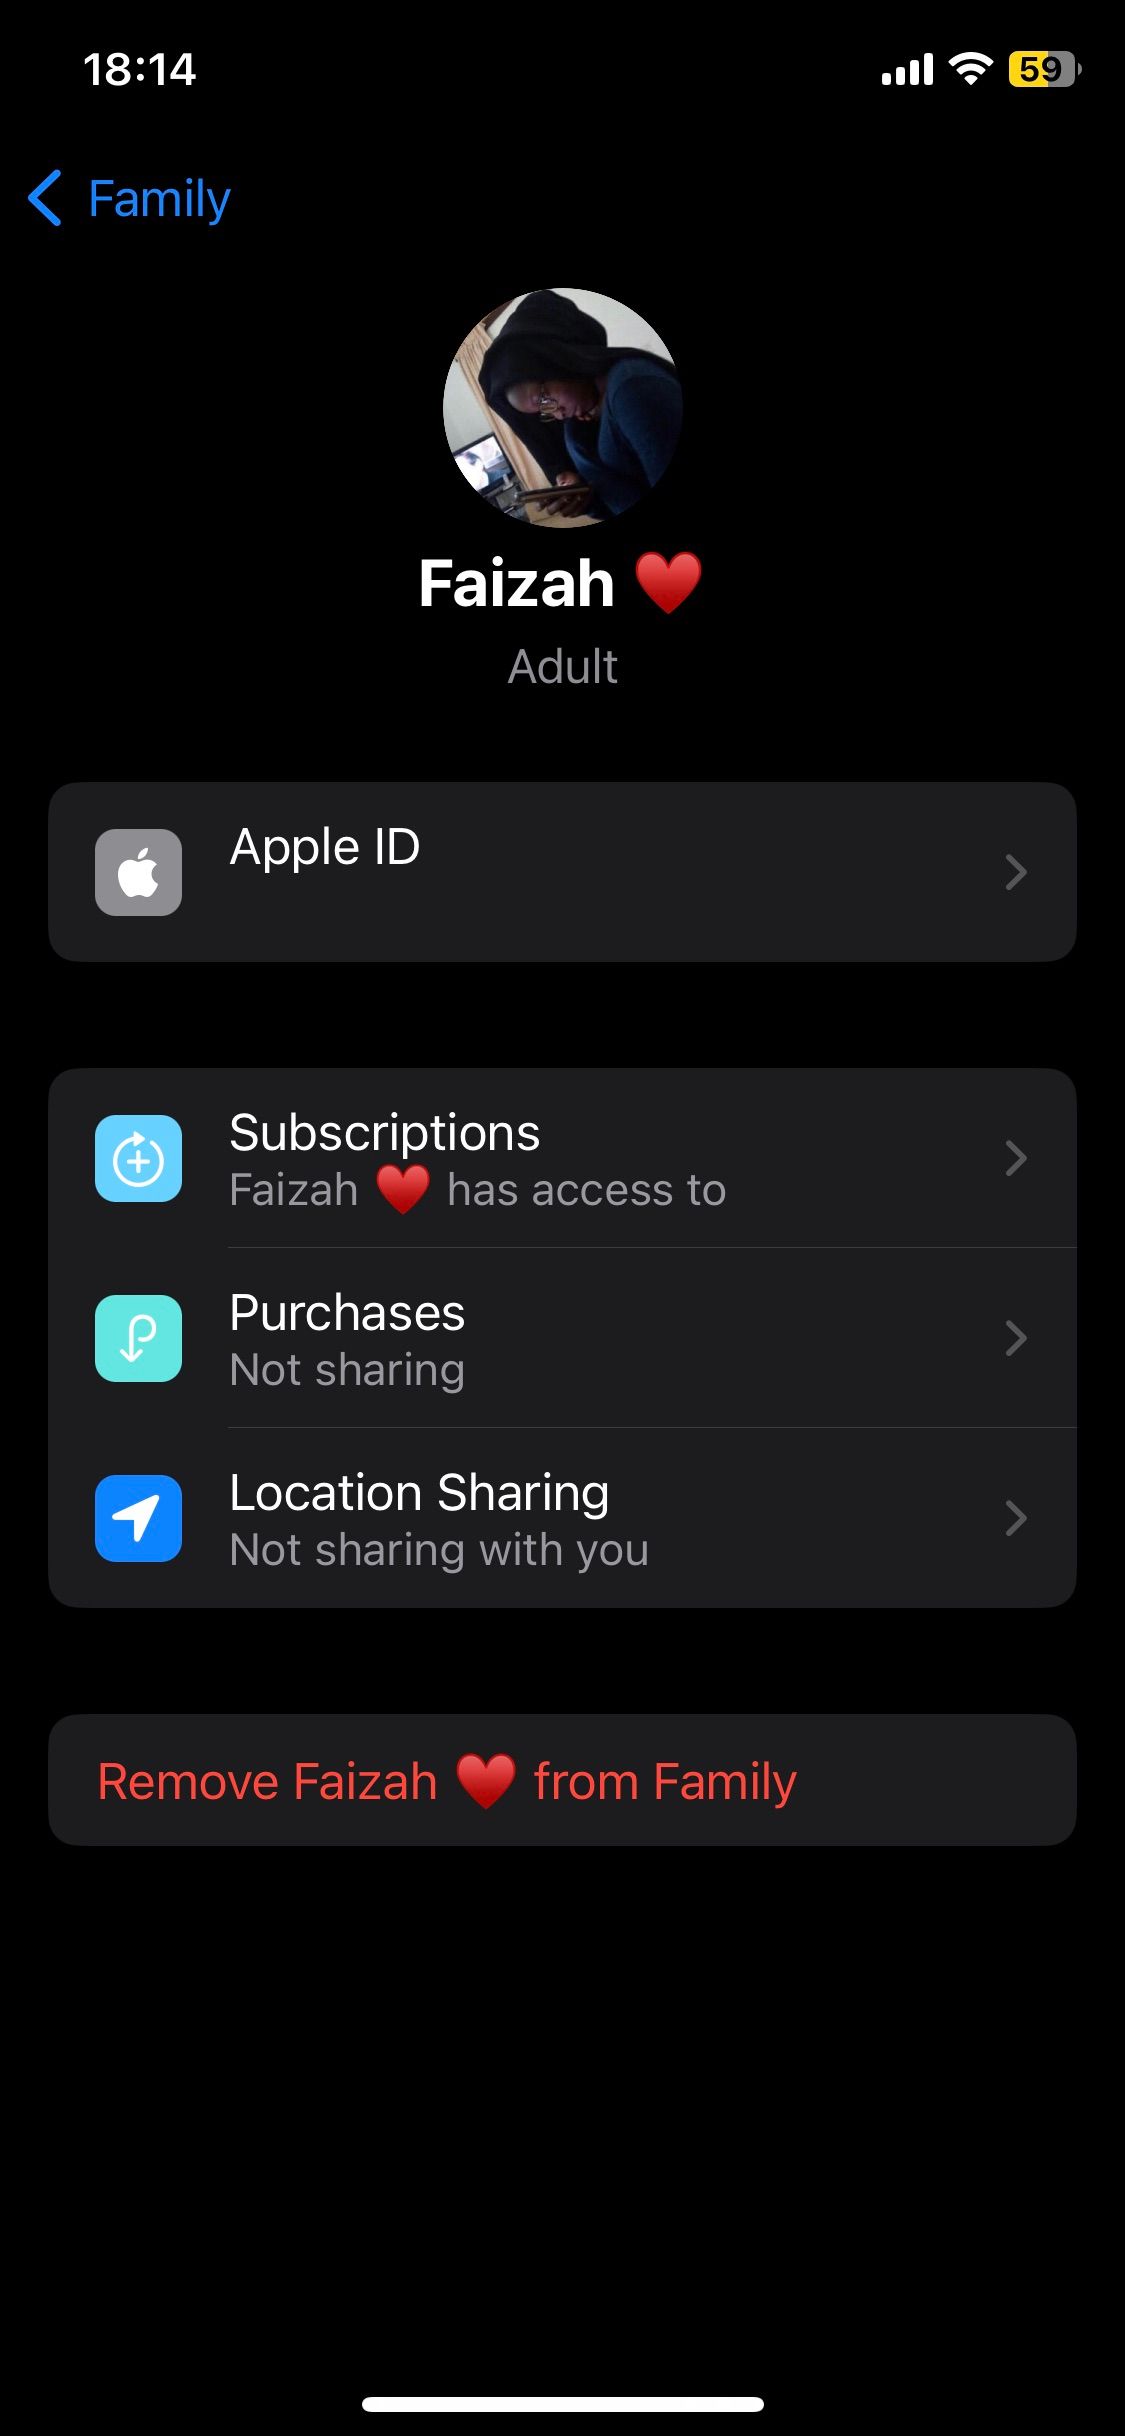 Faizah's Family menu displaying option to Remove Faizah from Family